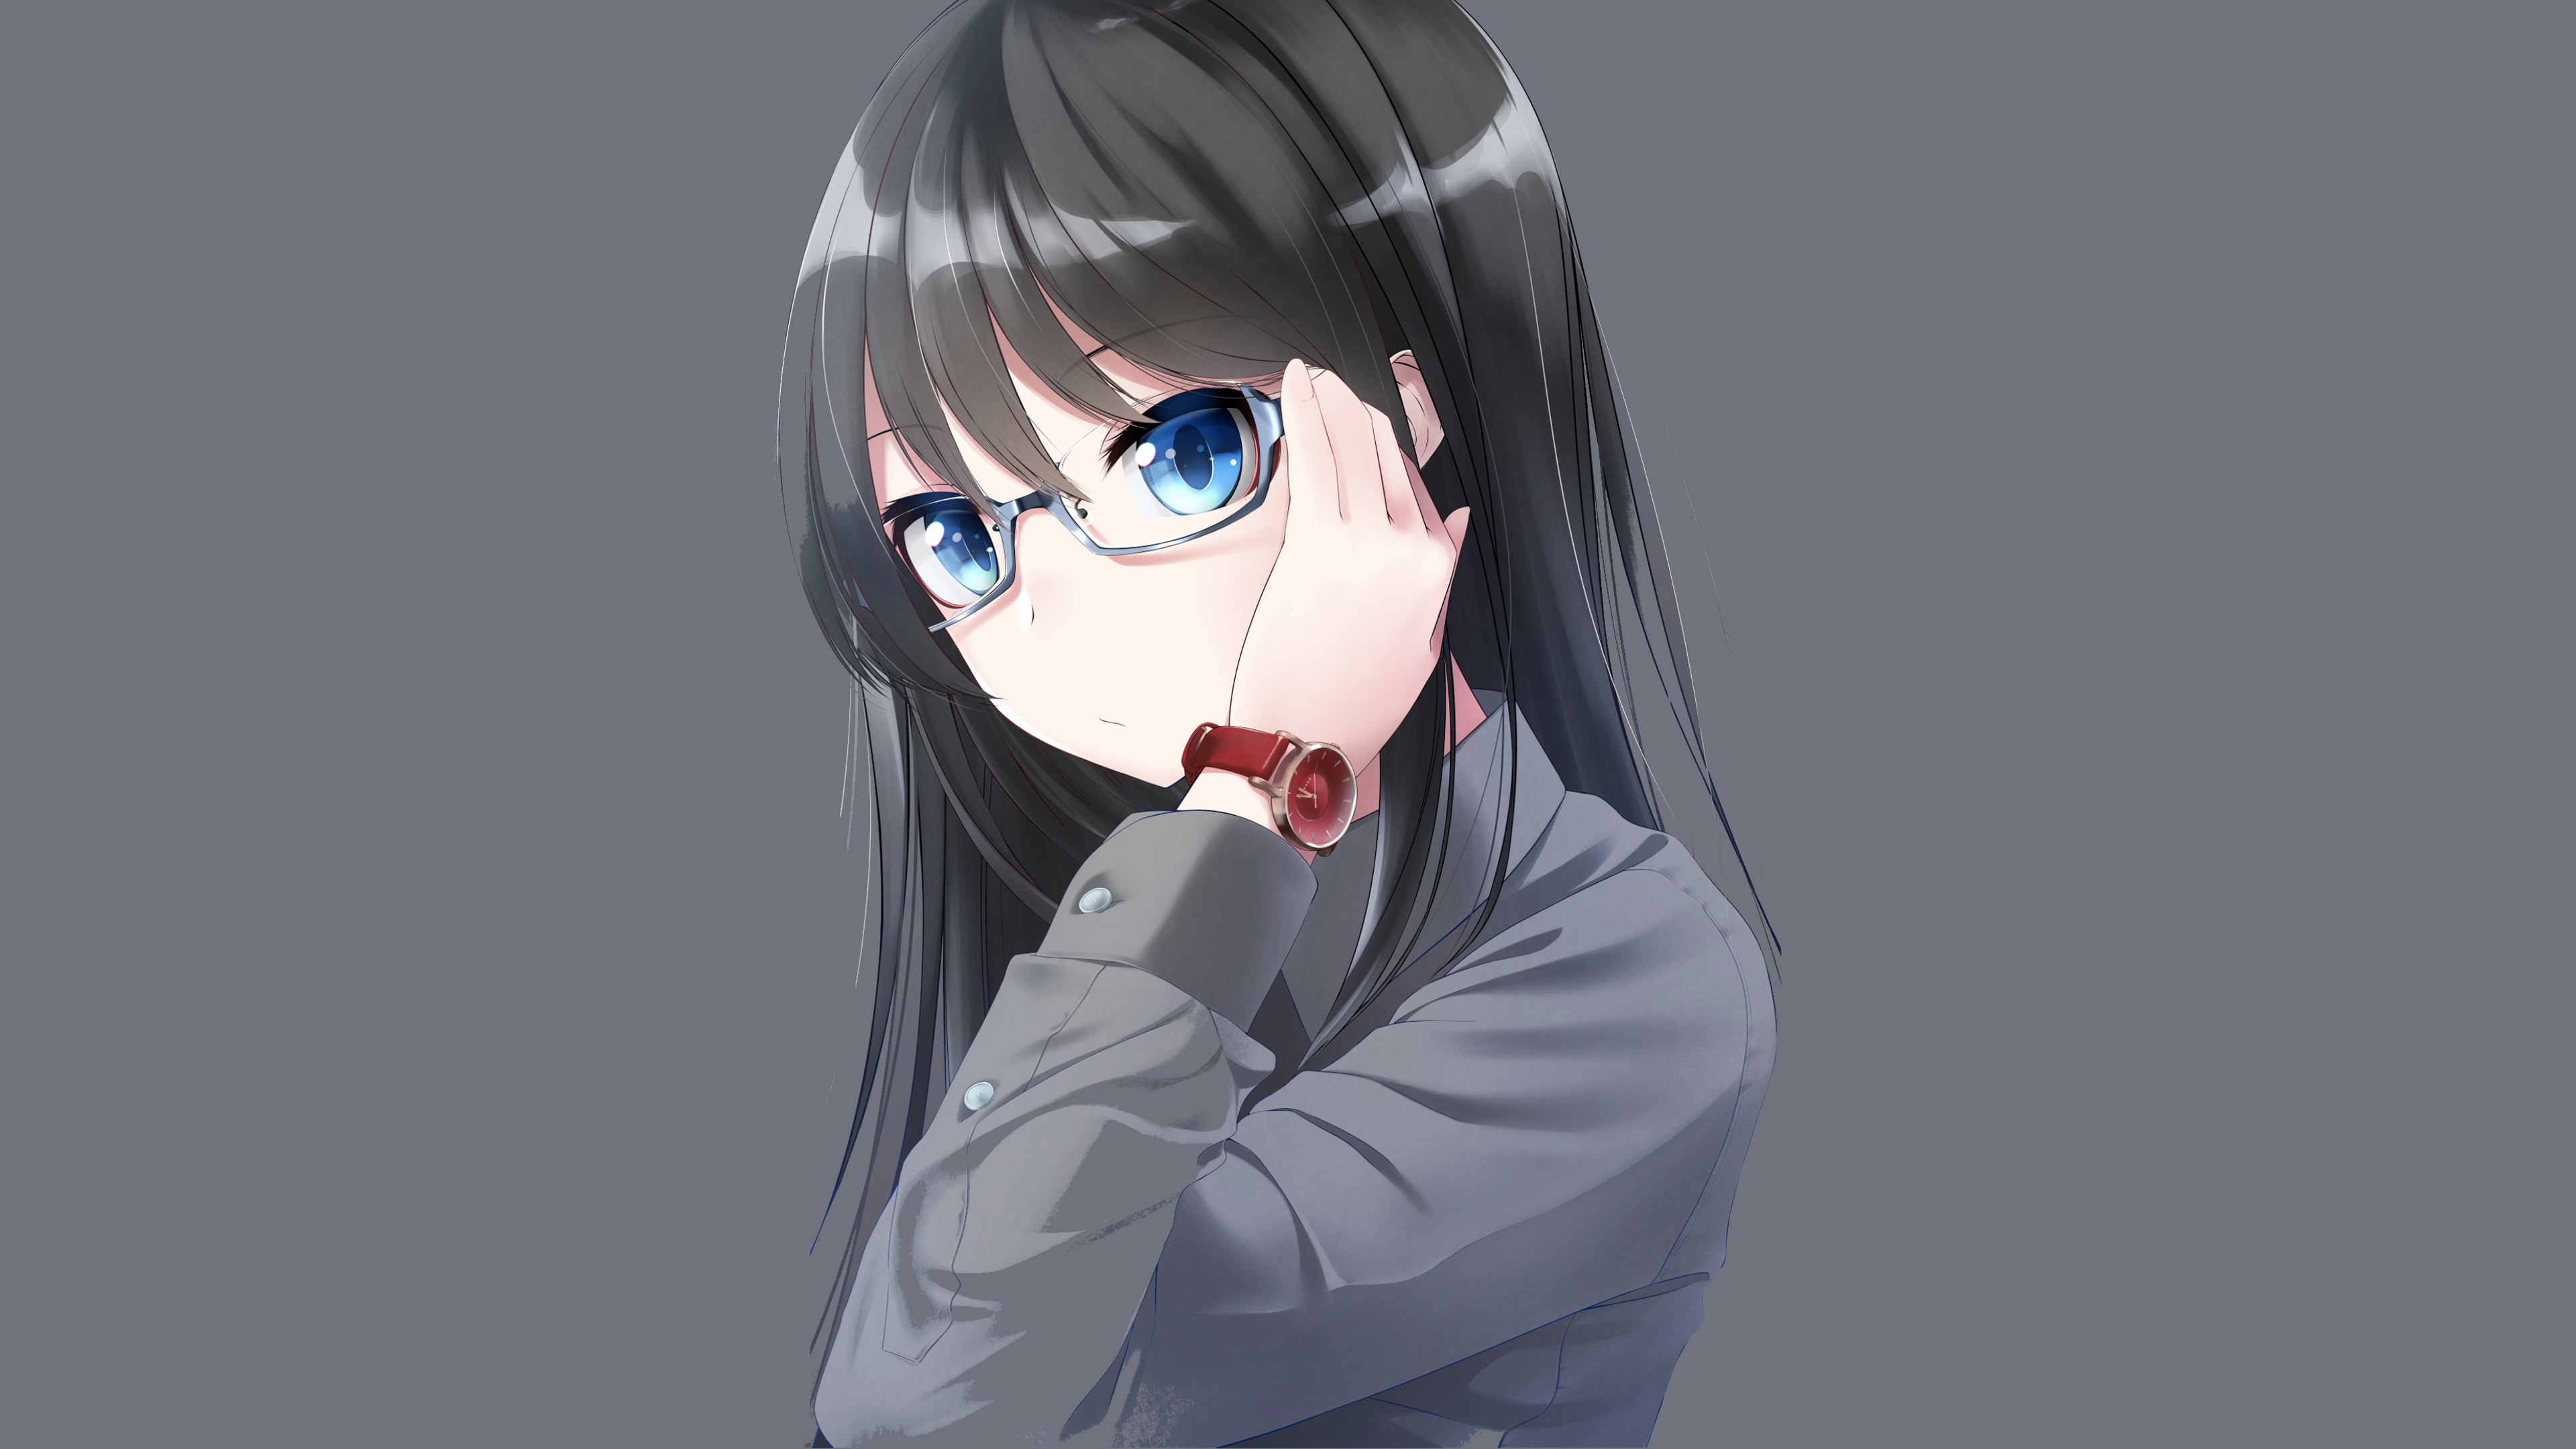 Anime Girl 4k Ultra Hd Wallpaper Background Image 3840x2160